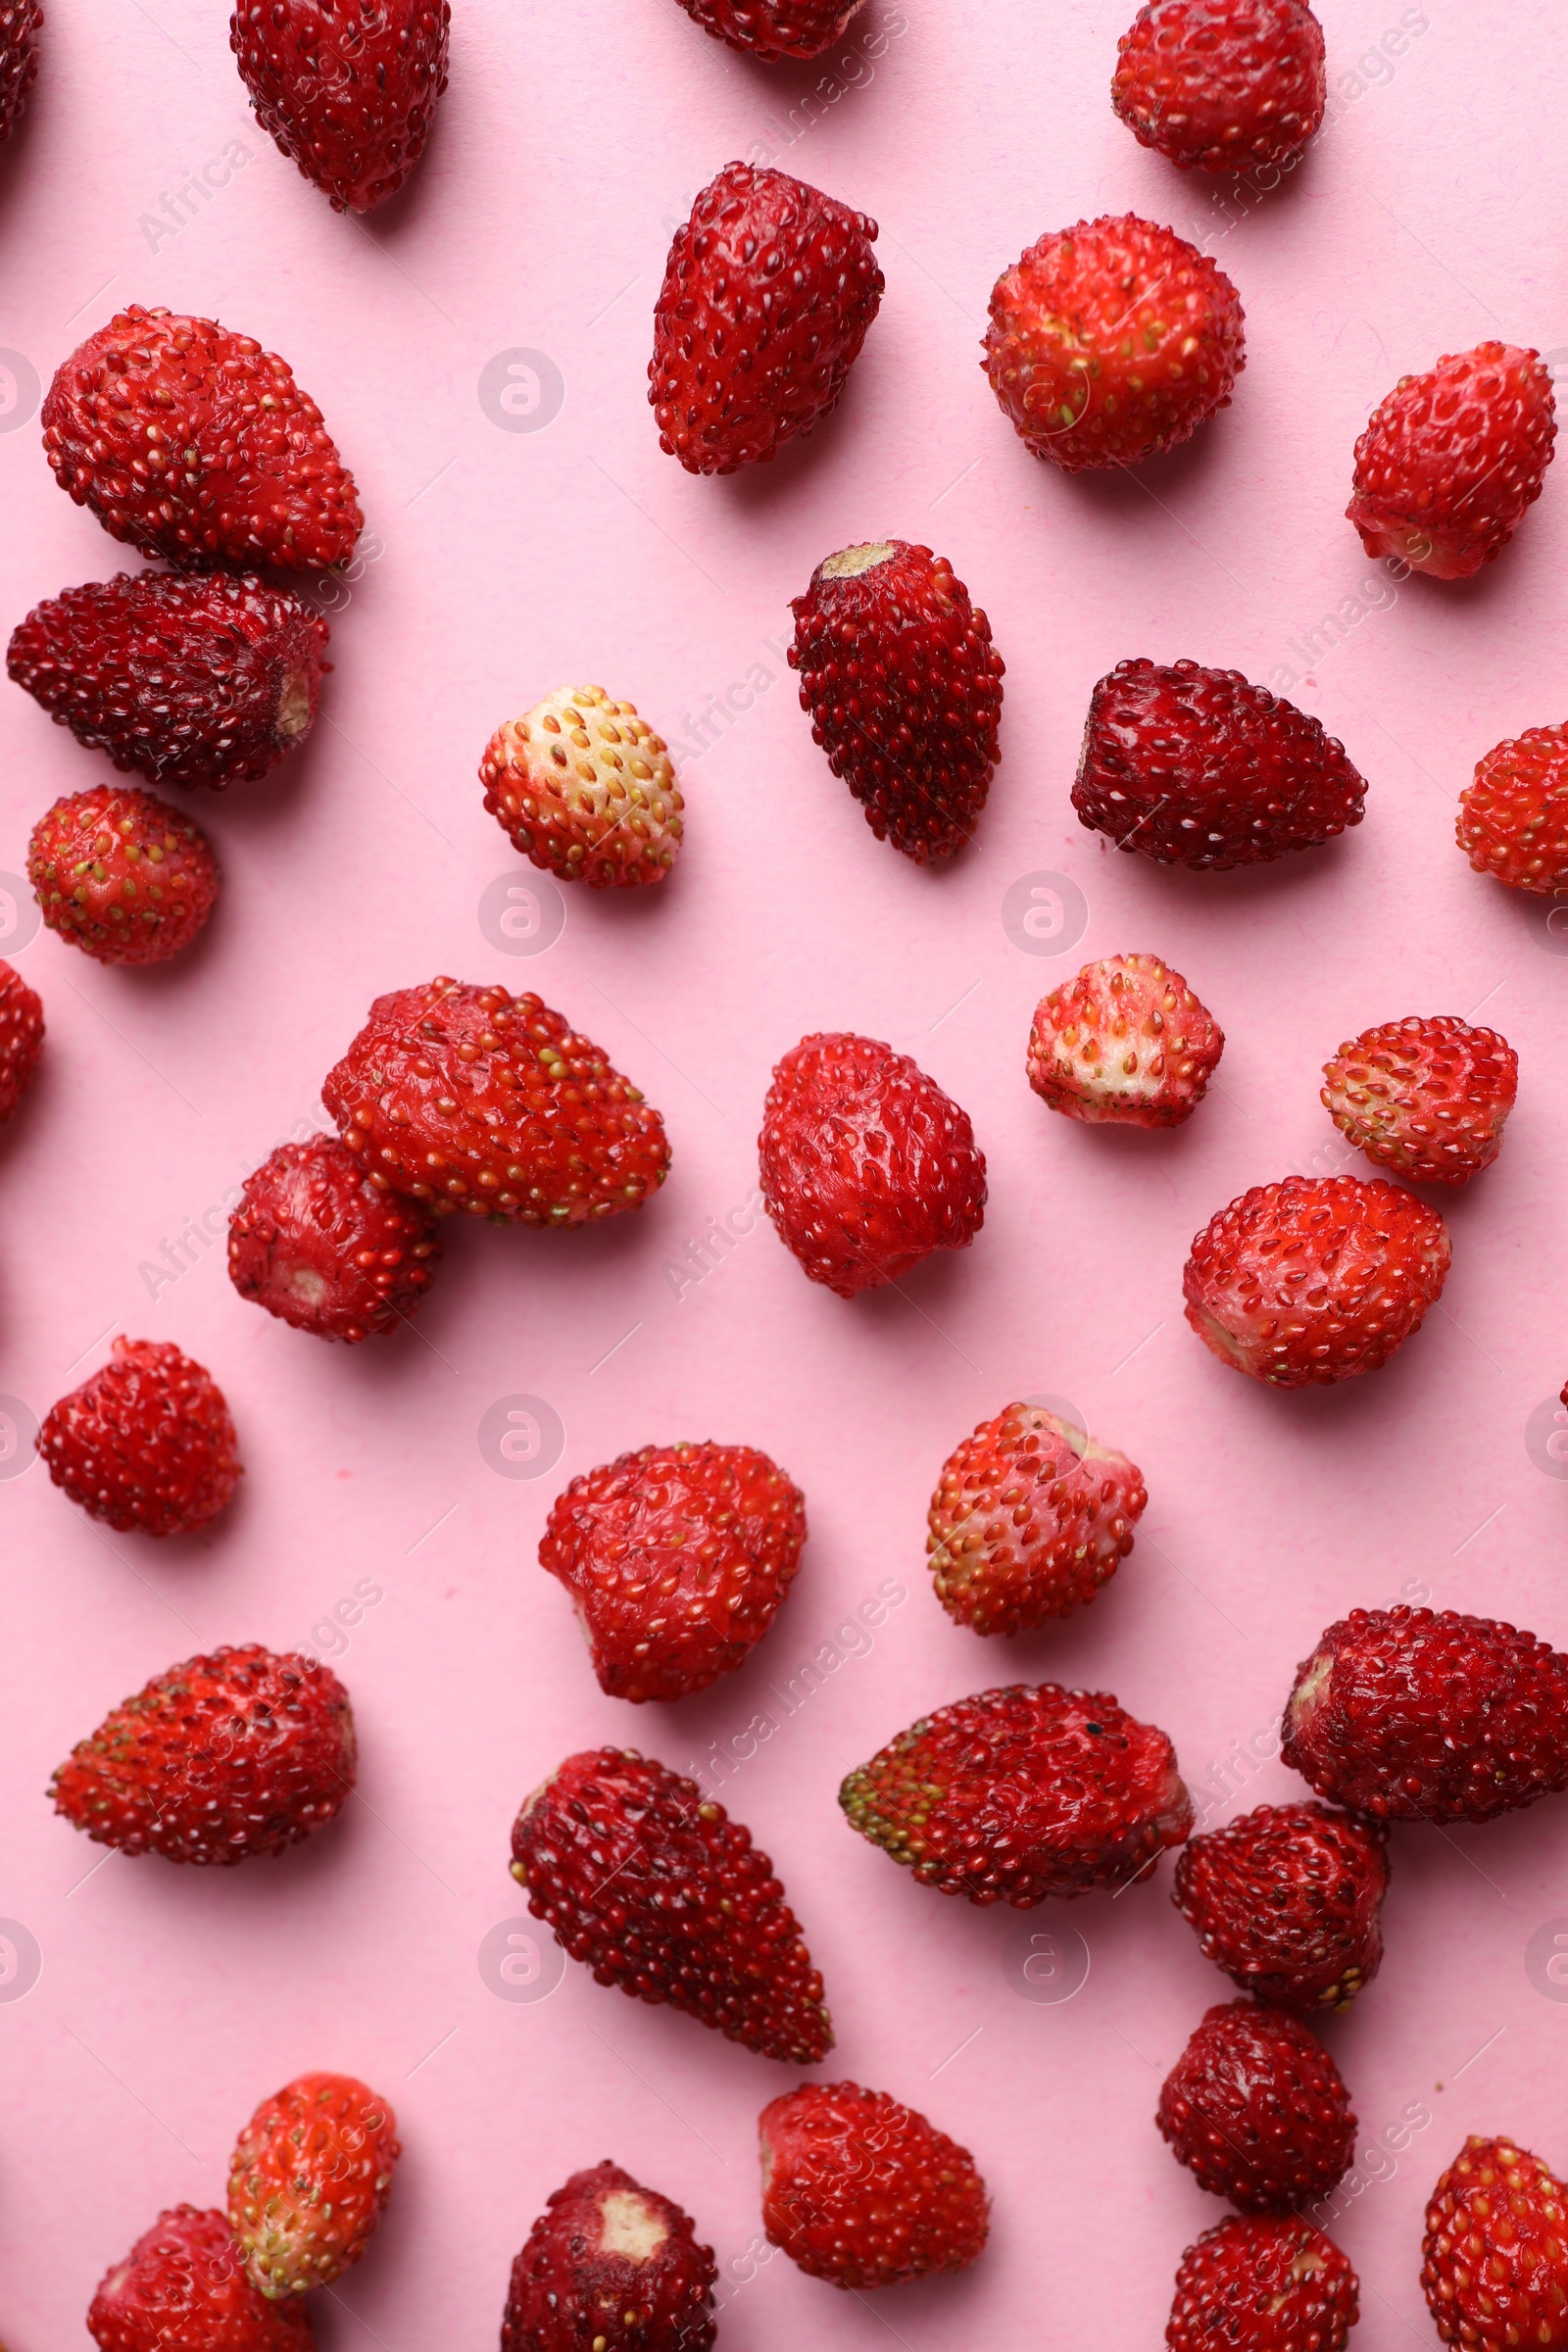 Photo of Many fresh wild strawberries on pink background, flat lay